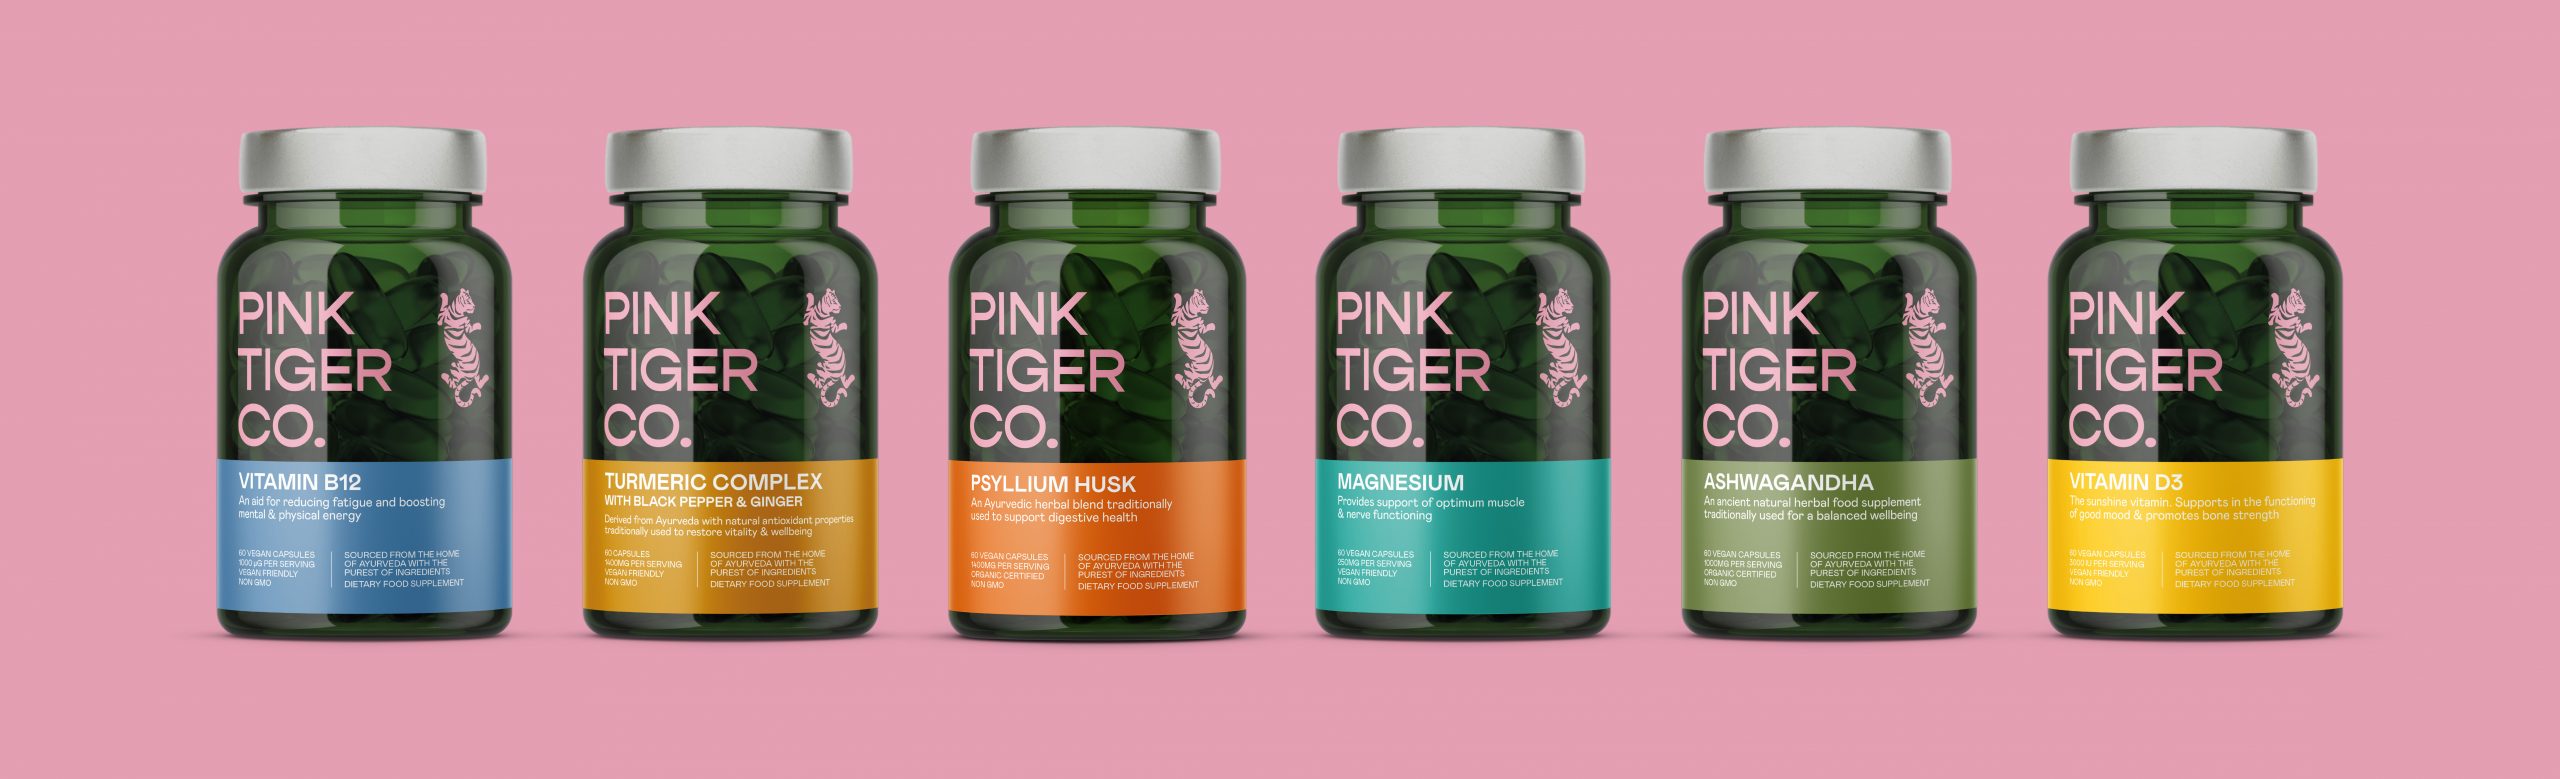 Pink-Tiger-Co-Bottles-Lineup